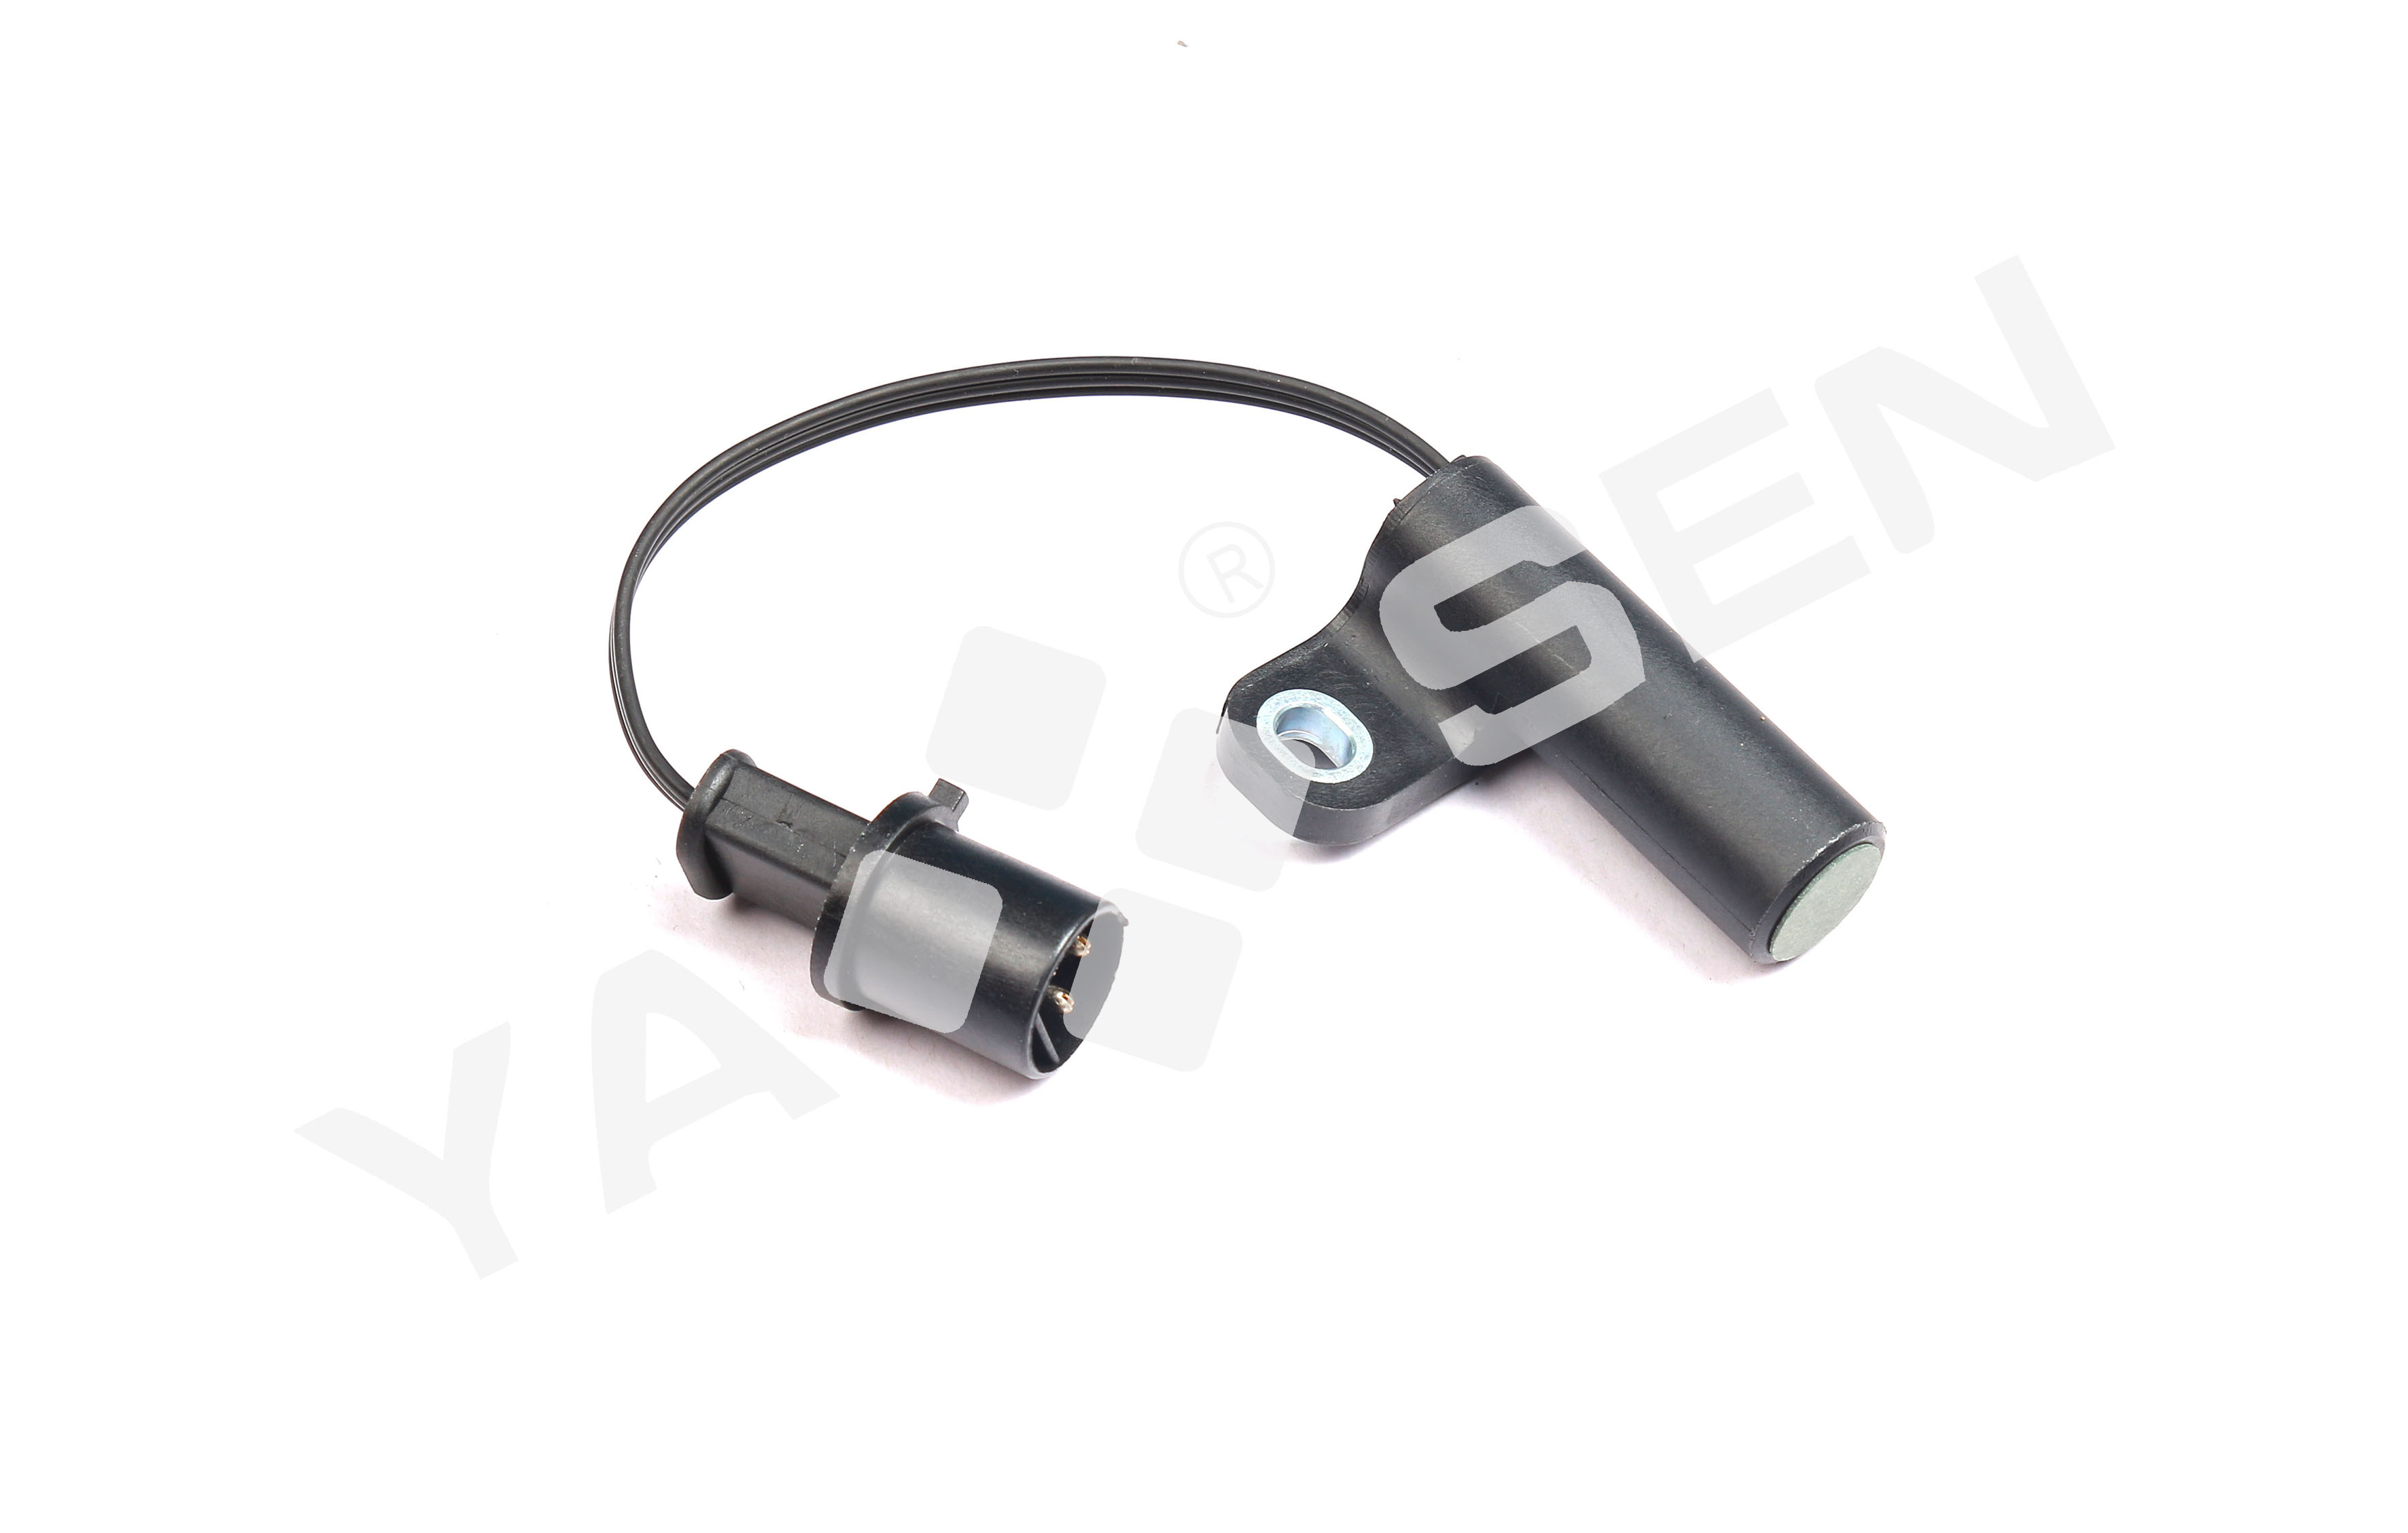 Crankshaft Position Sensor for  CHEVROLET/DODGE, 4443923  4443925  4504224  5S1704  96129  SU355  PC36 Featured Image